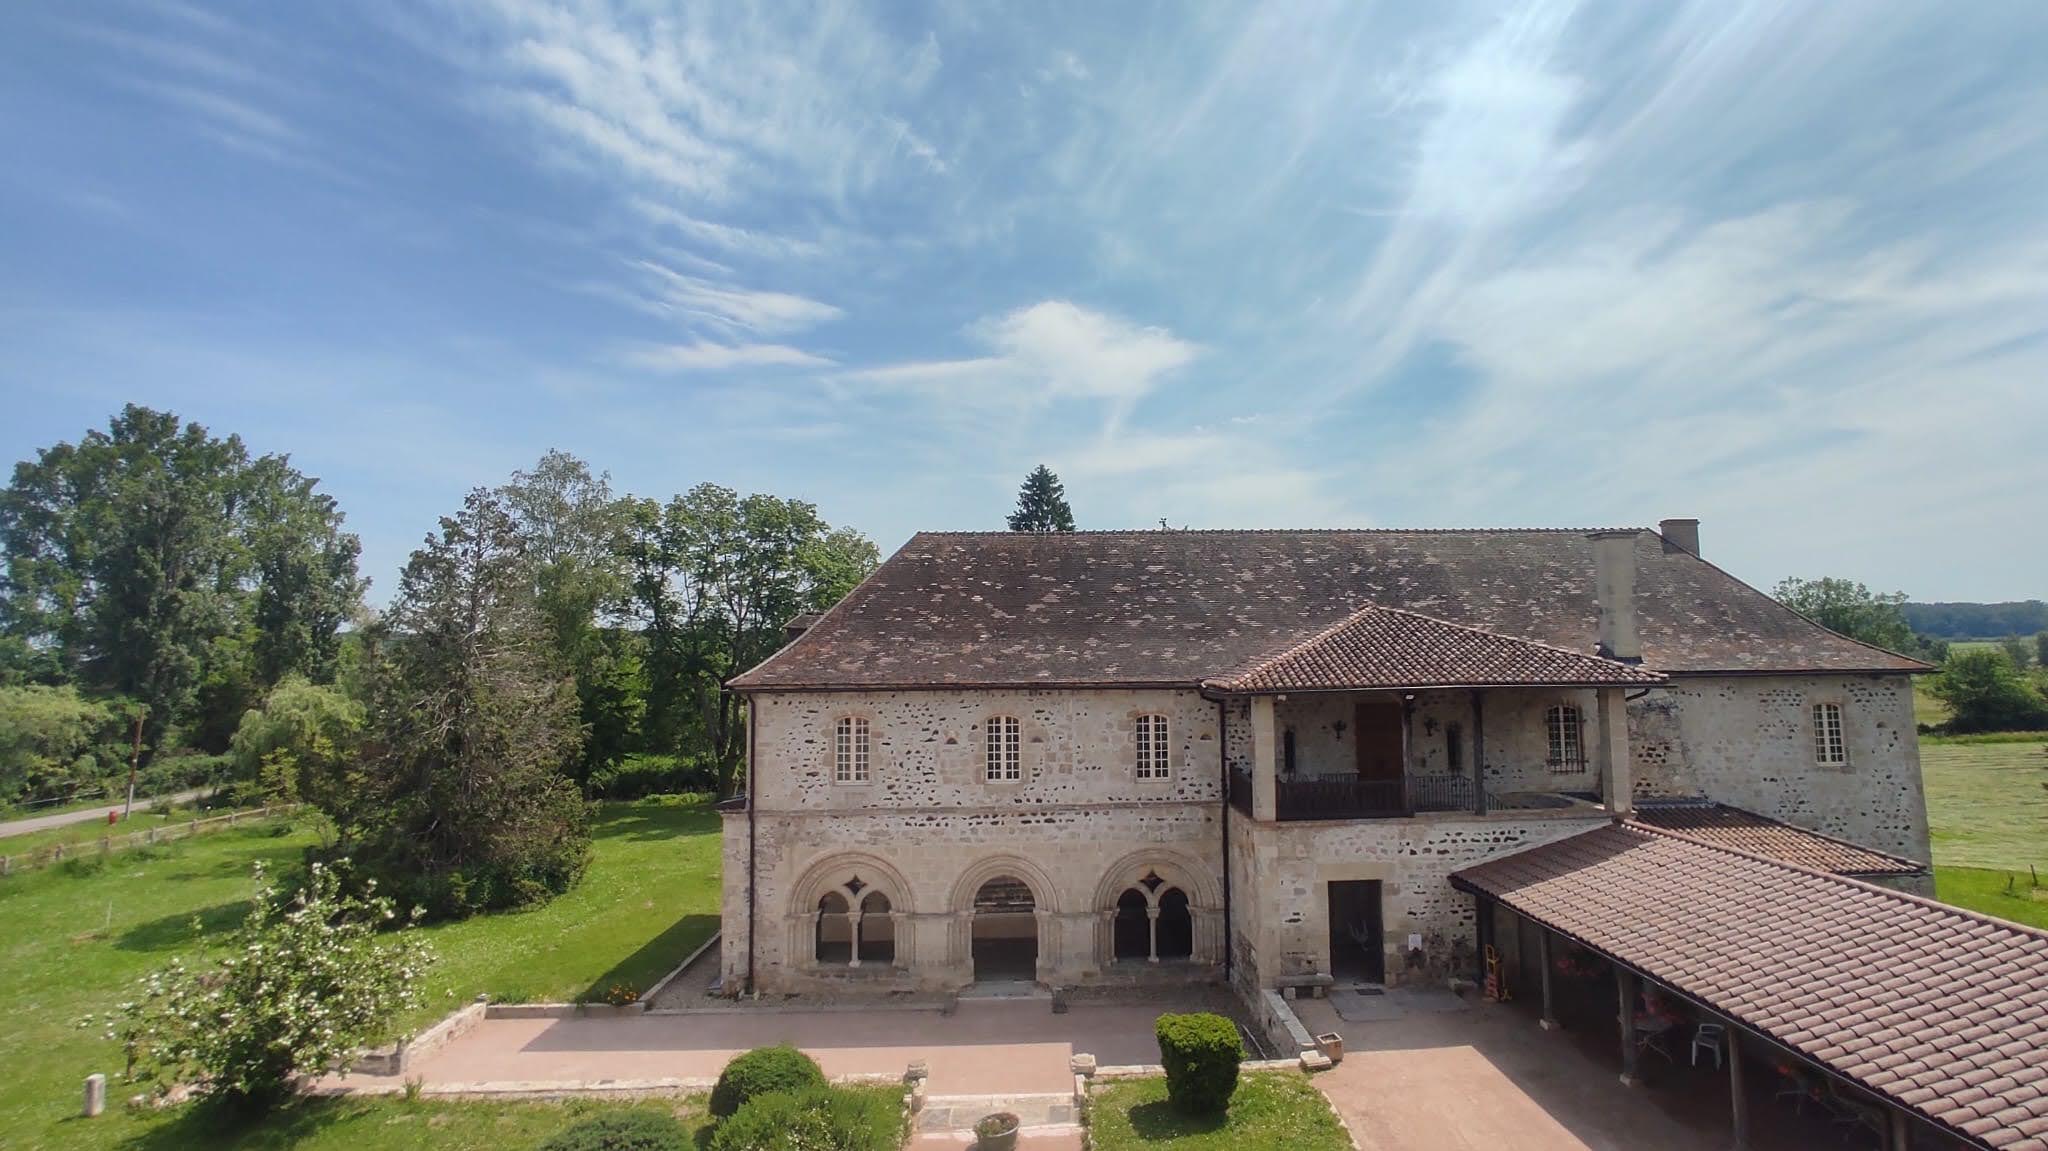 (c) Abbaye-saint-gilbert.com